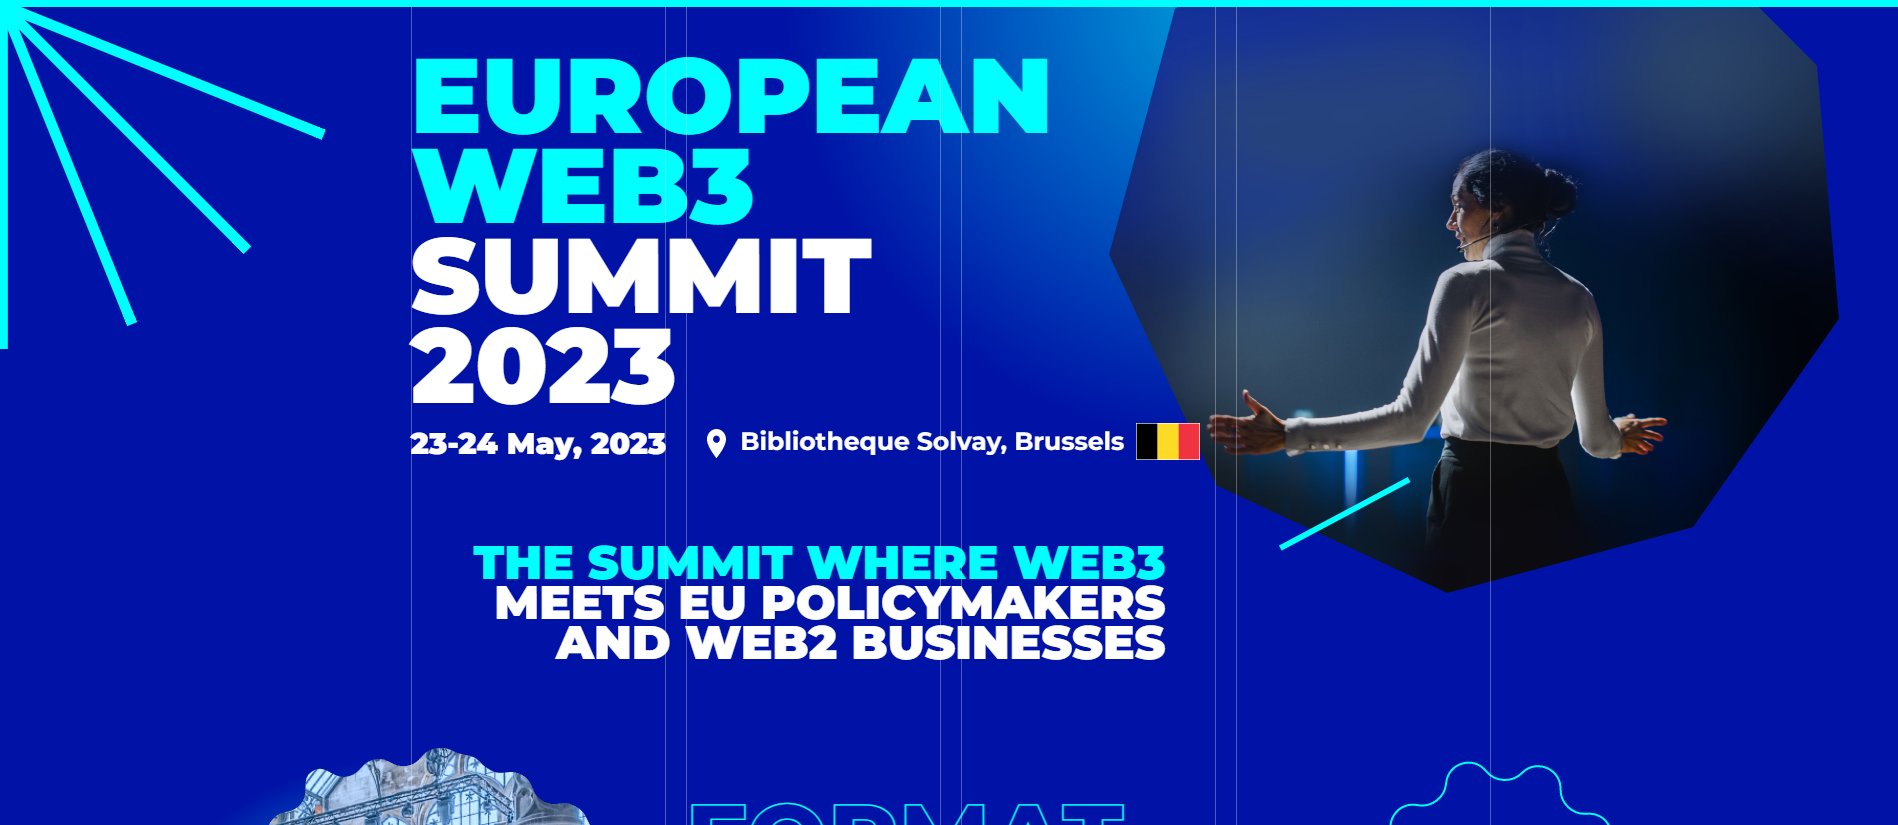 European Web3 Summit 2023